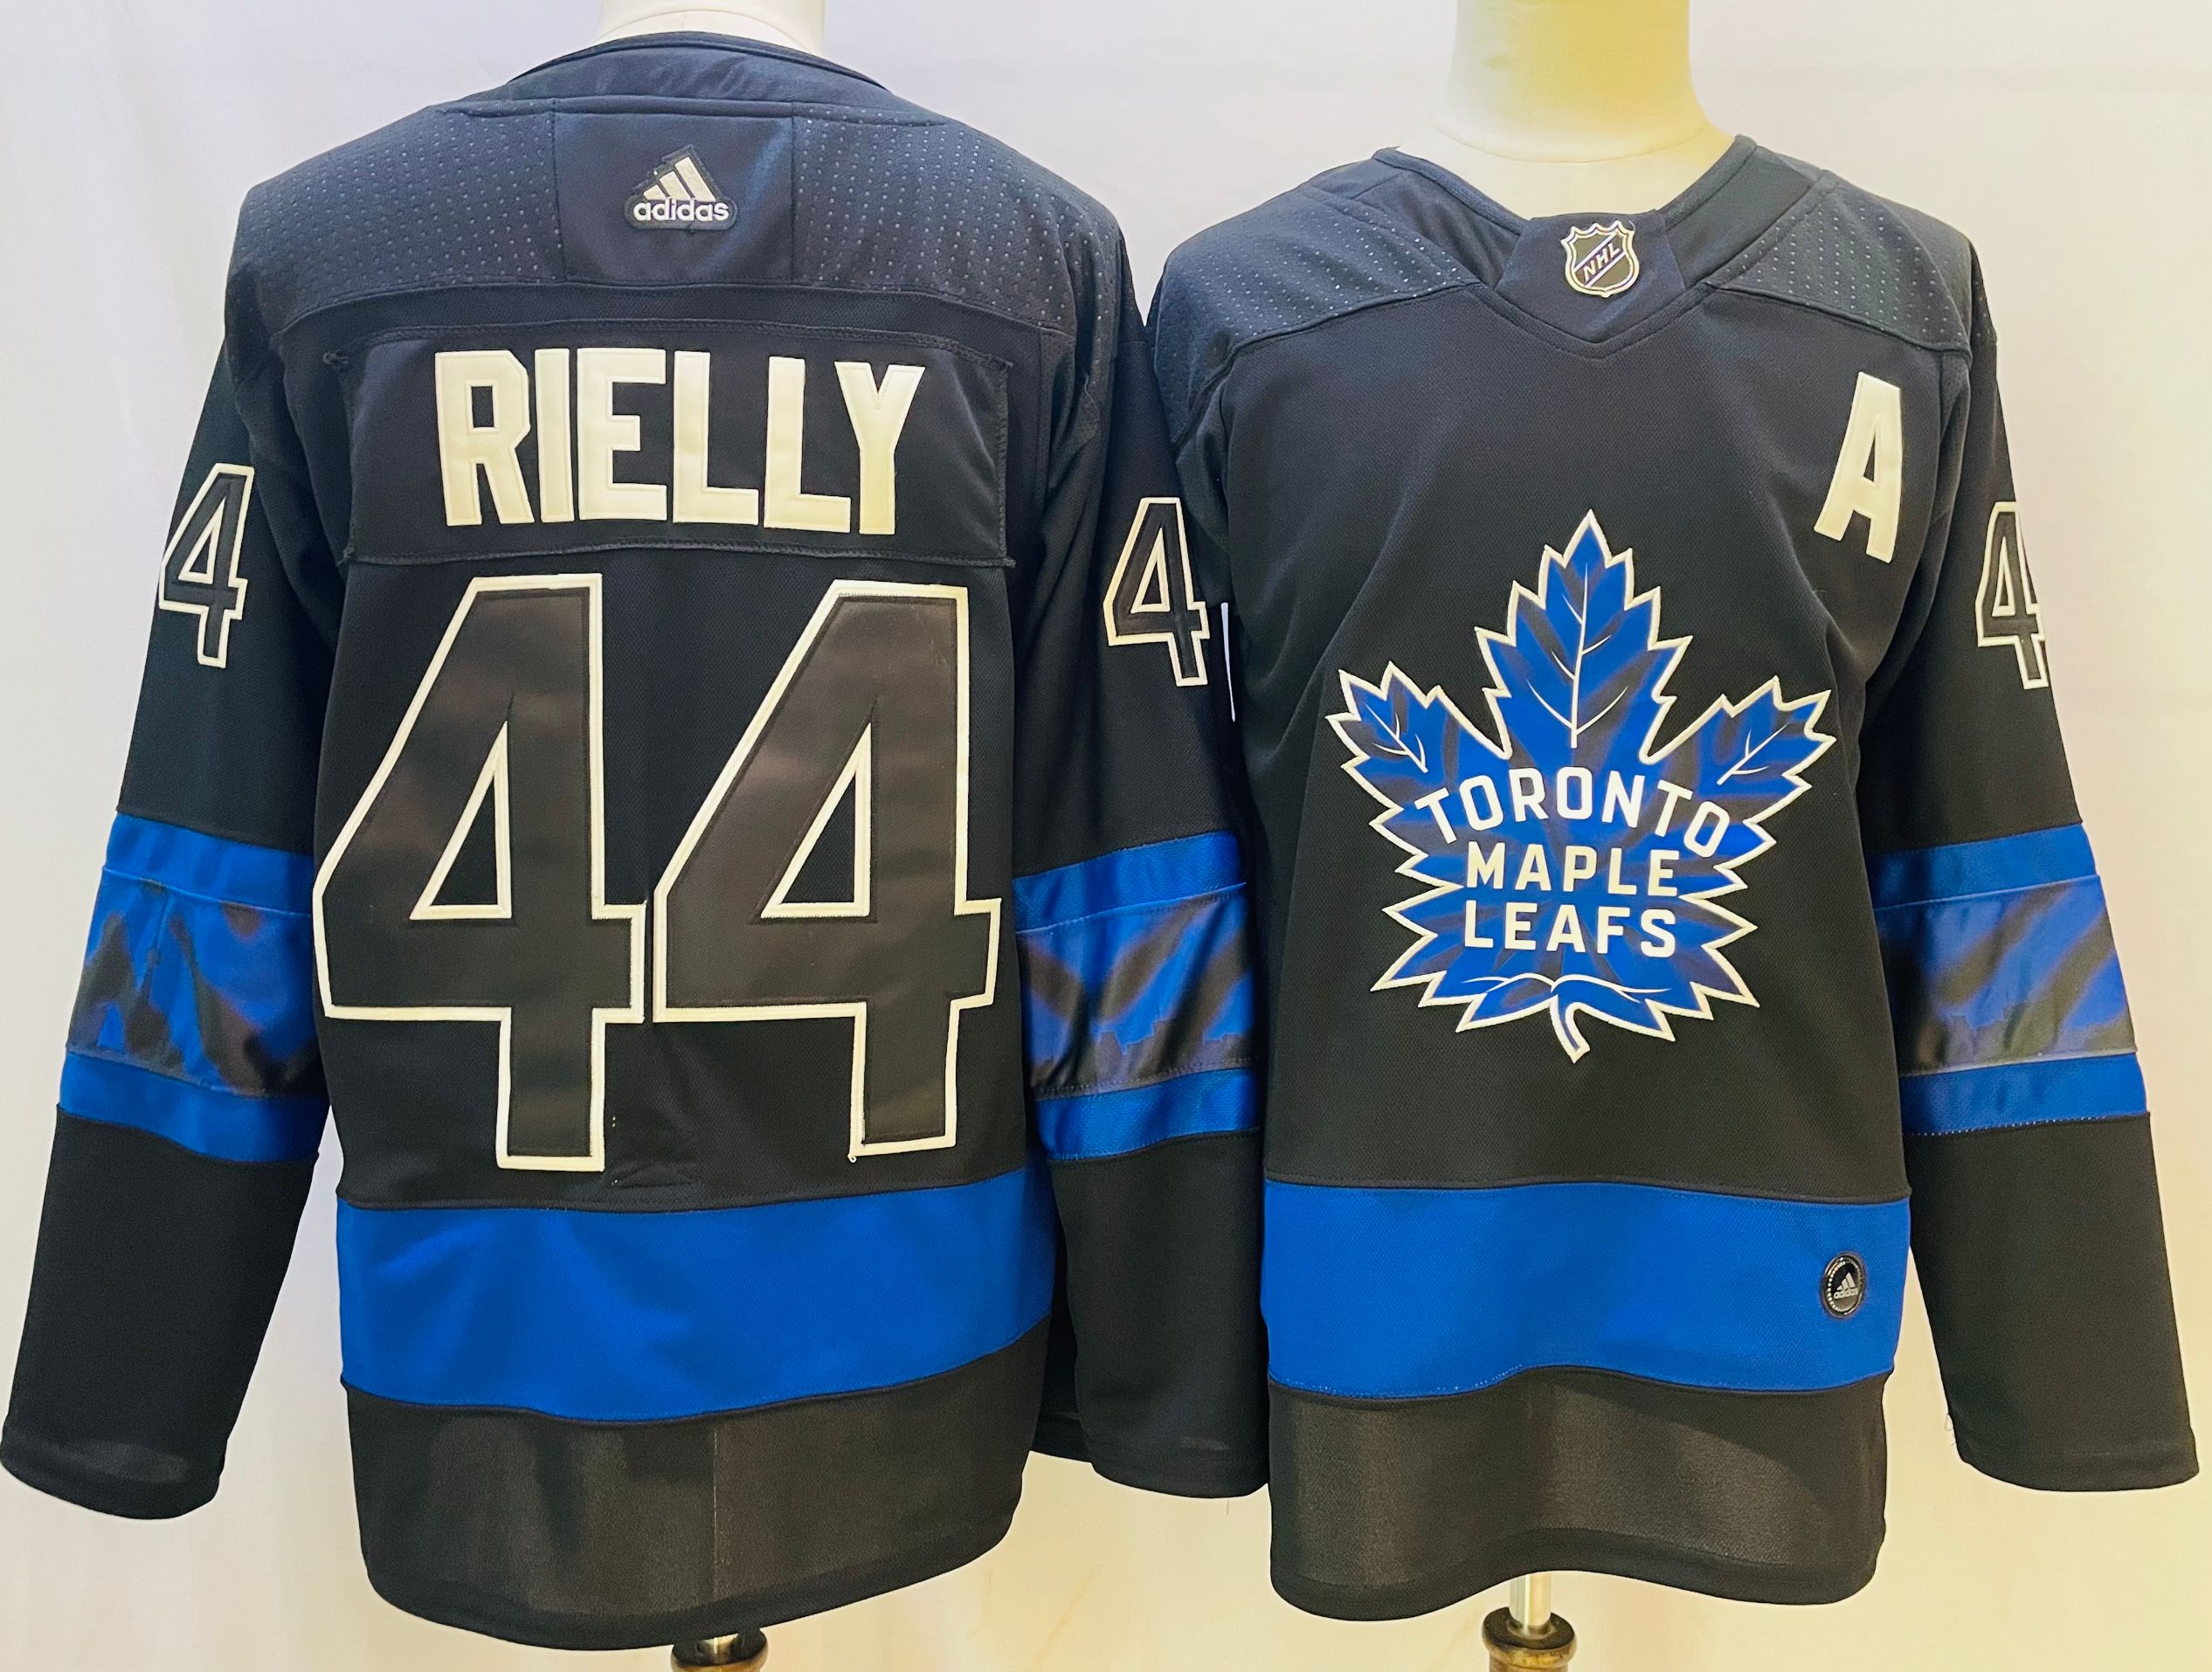 Adidas Toronto Maple leafs #44 Rielly Black Jersey